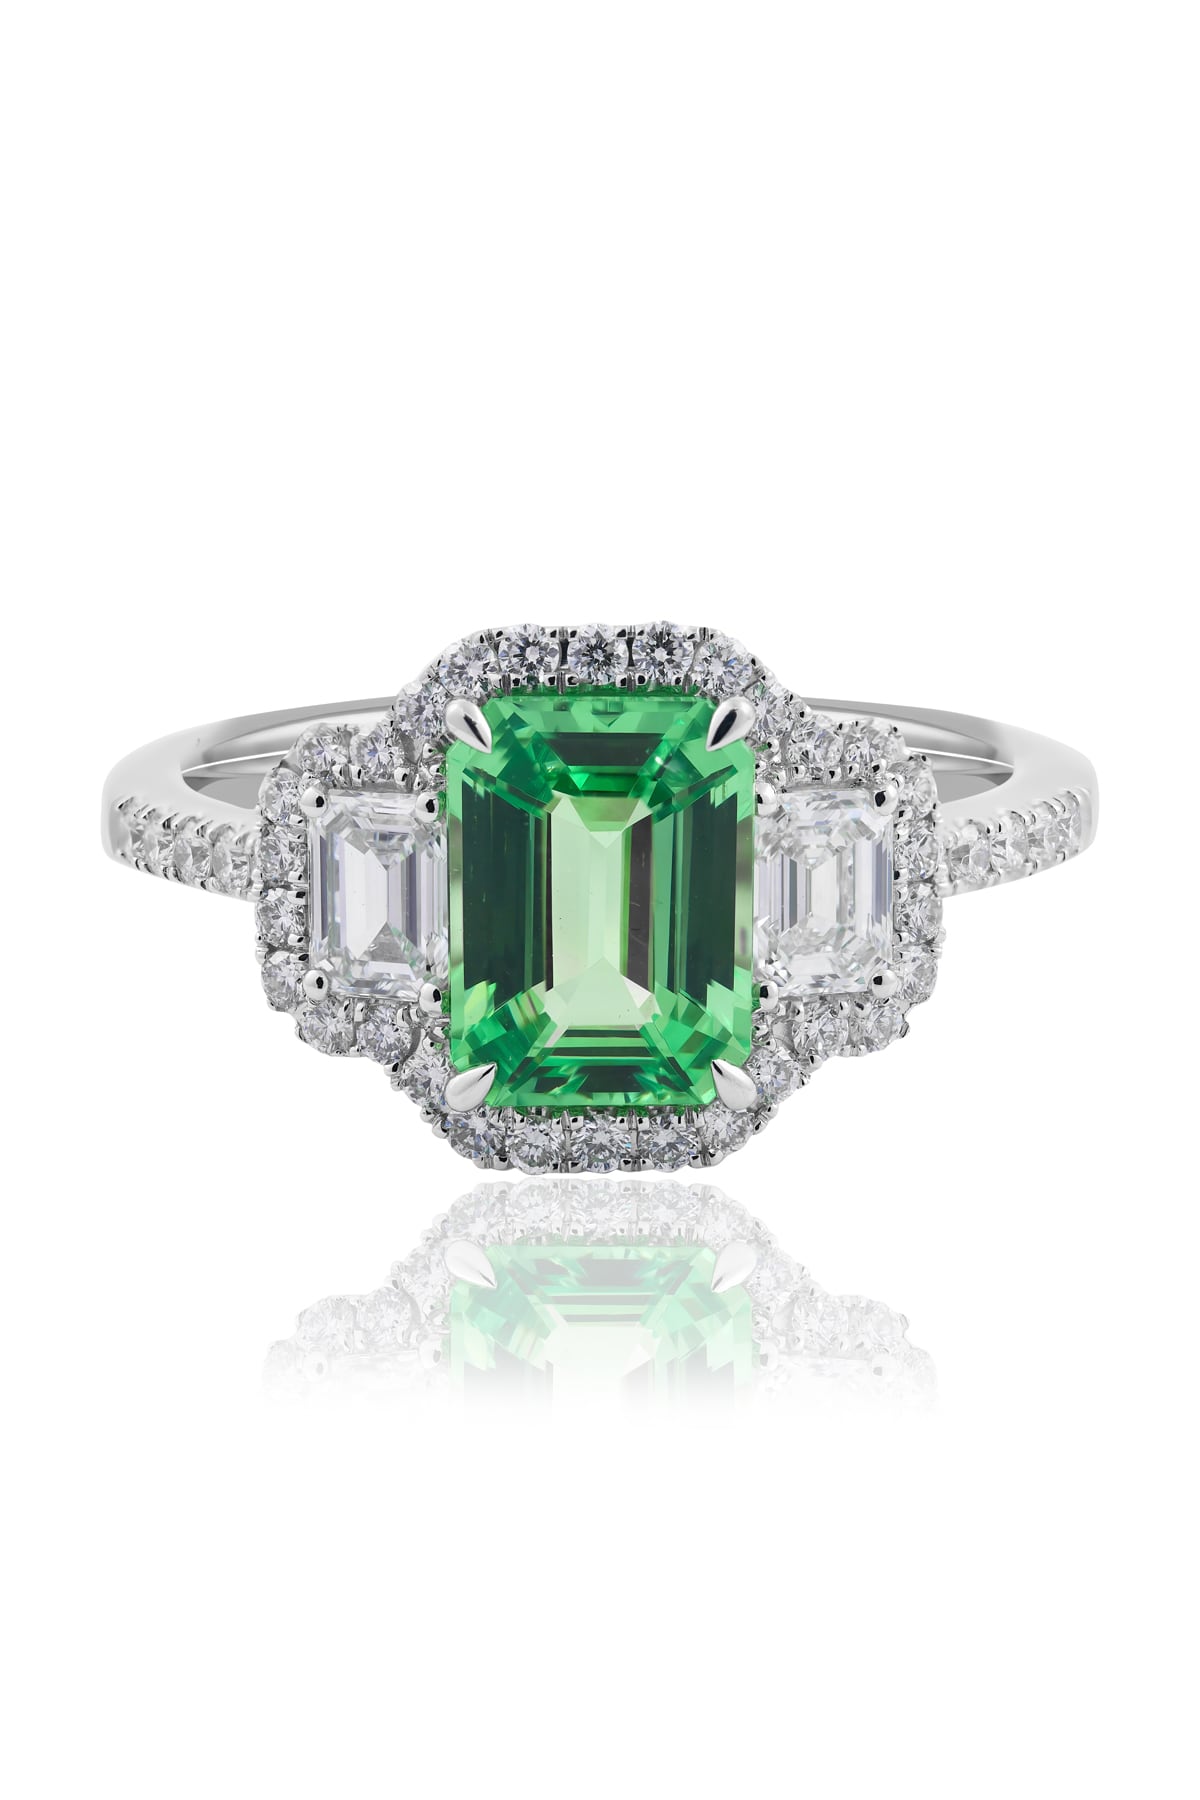 Natural Emerald Cut Tsavorite Garnet & Diamond Ring from LeGassick Jewellery.